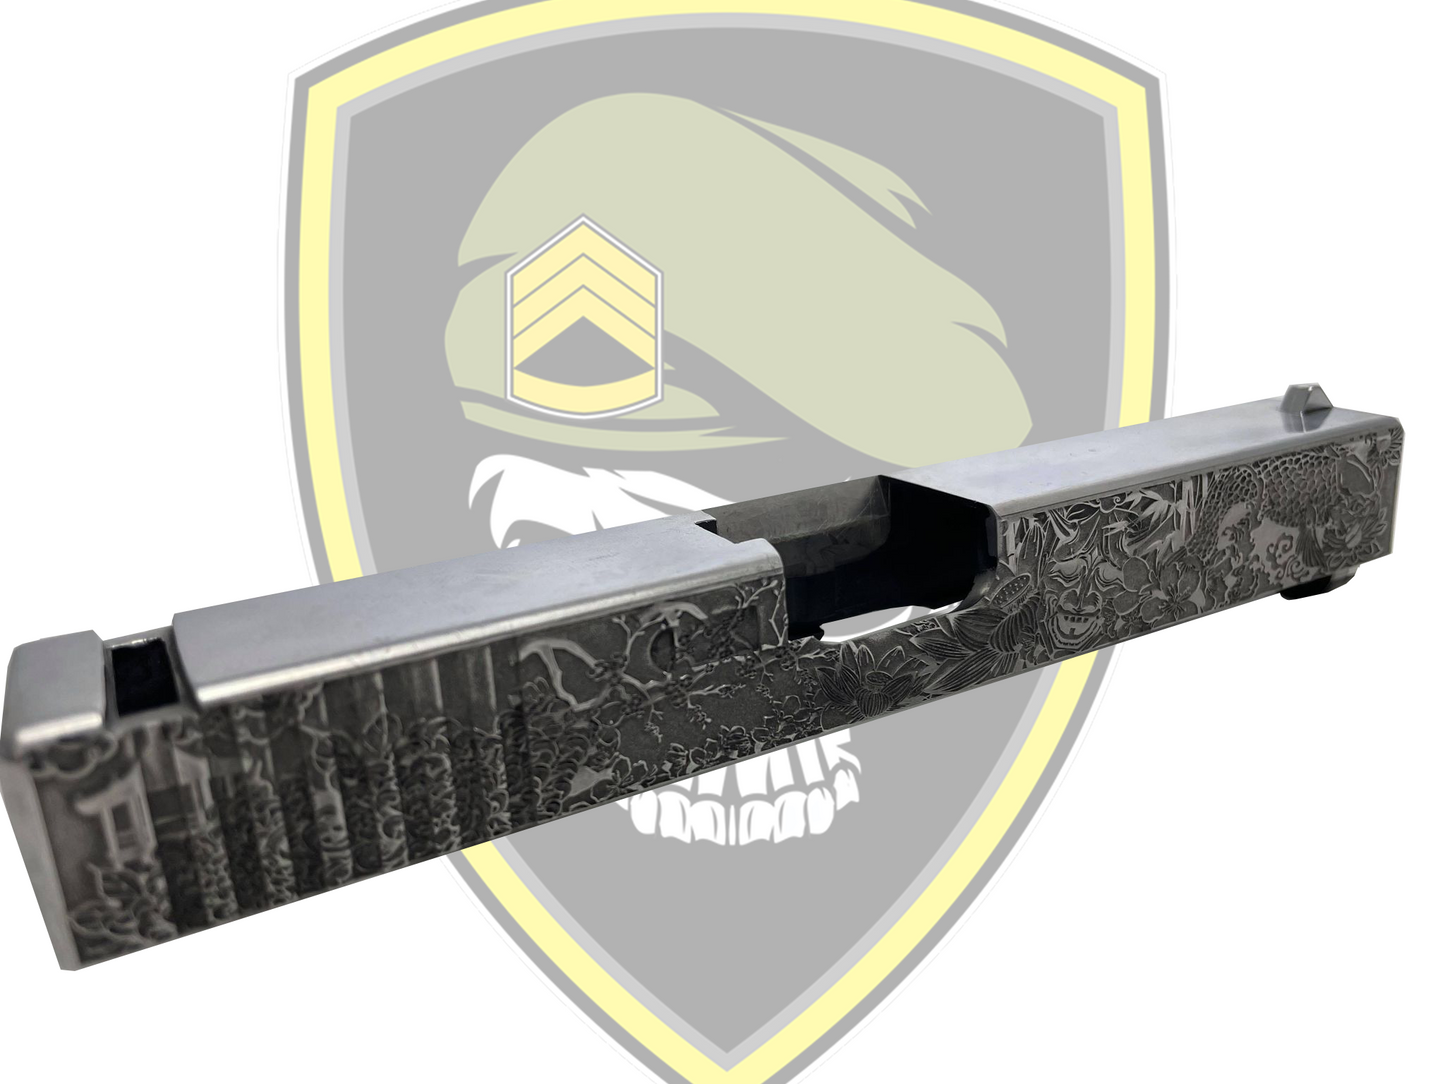 Laser Etched Metal Slides for GBB Glock (VARIOUS STYLES) - Command Elite Hobbies